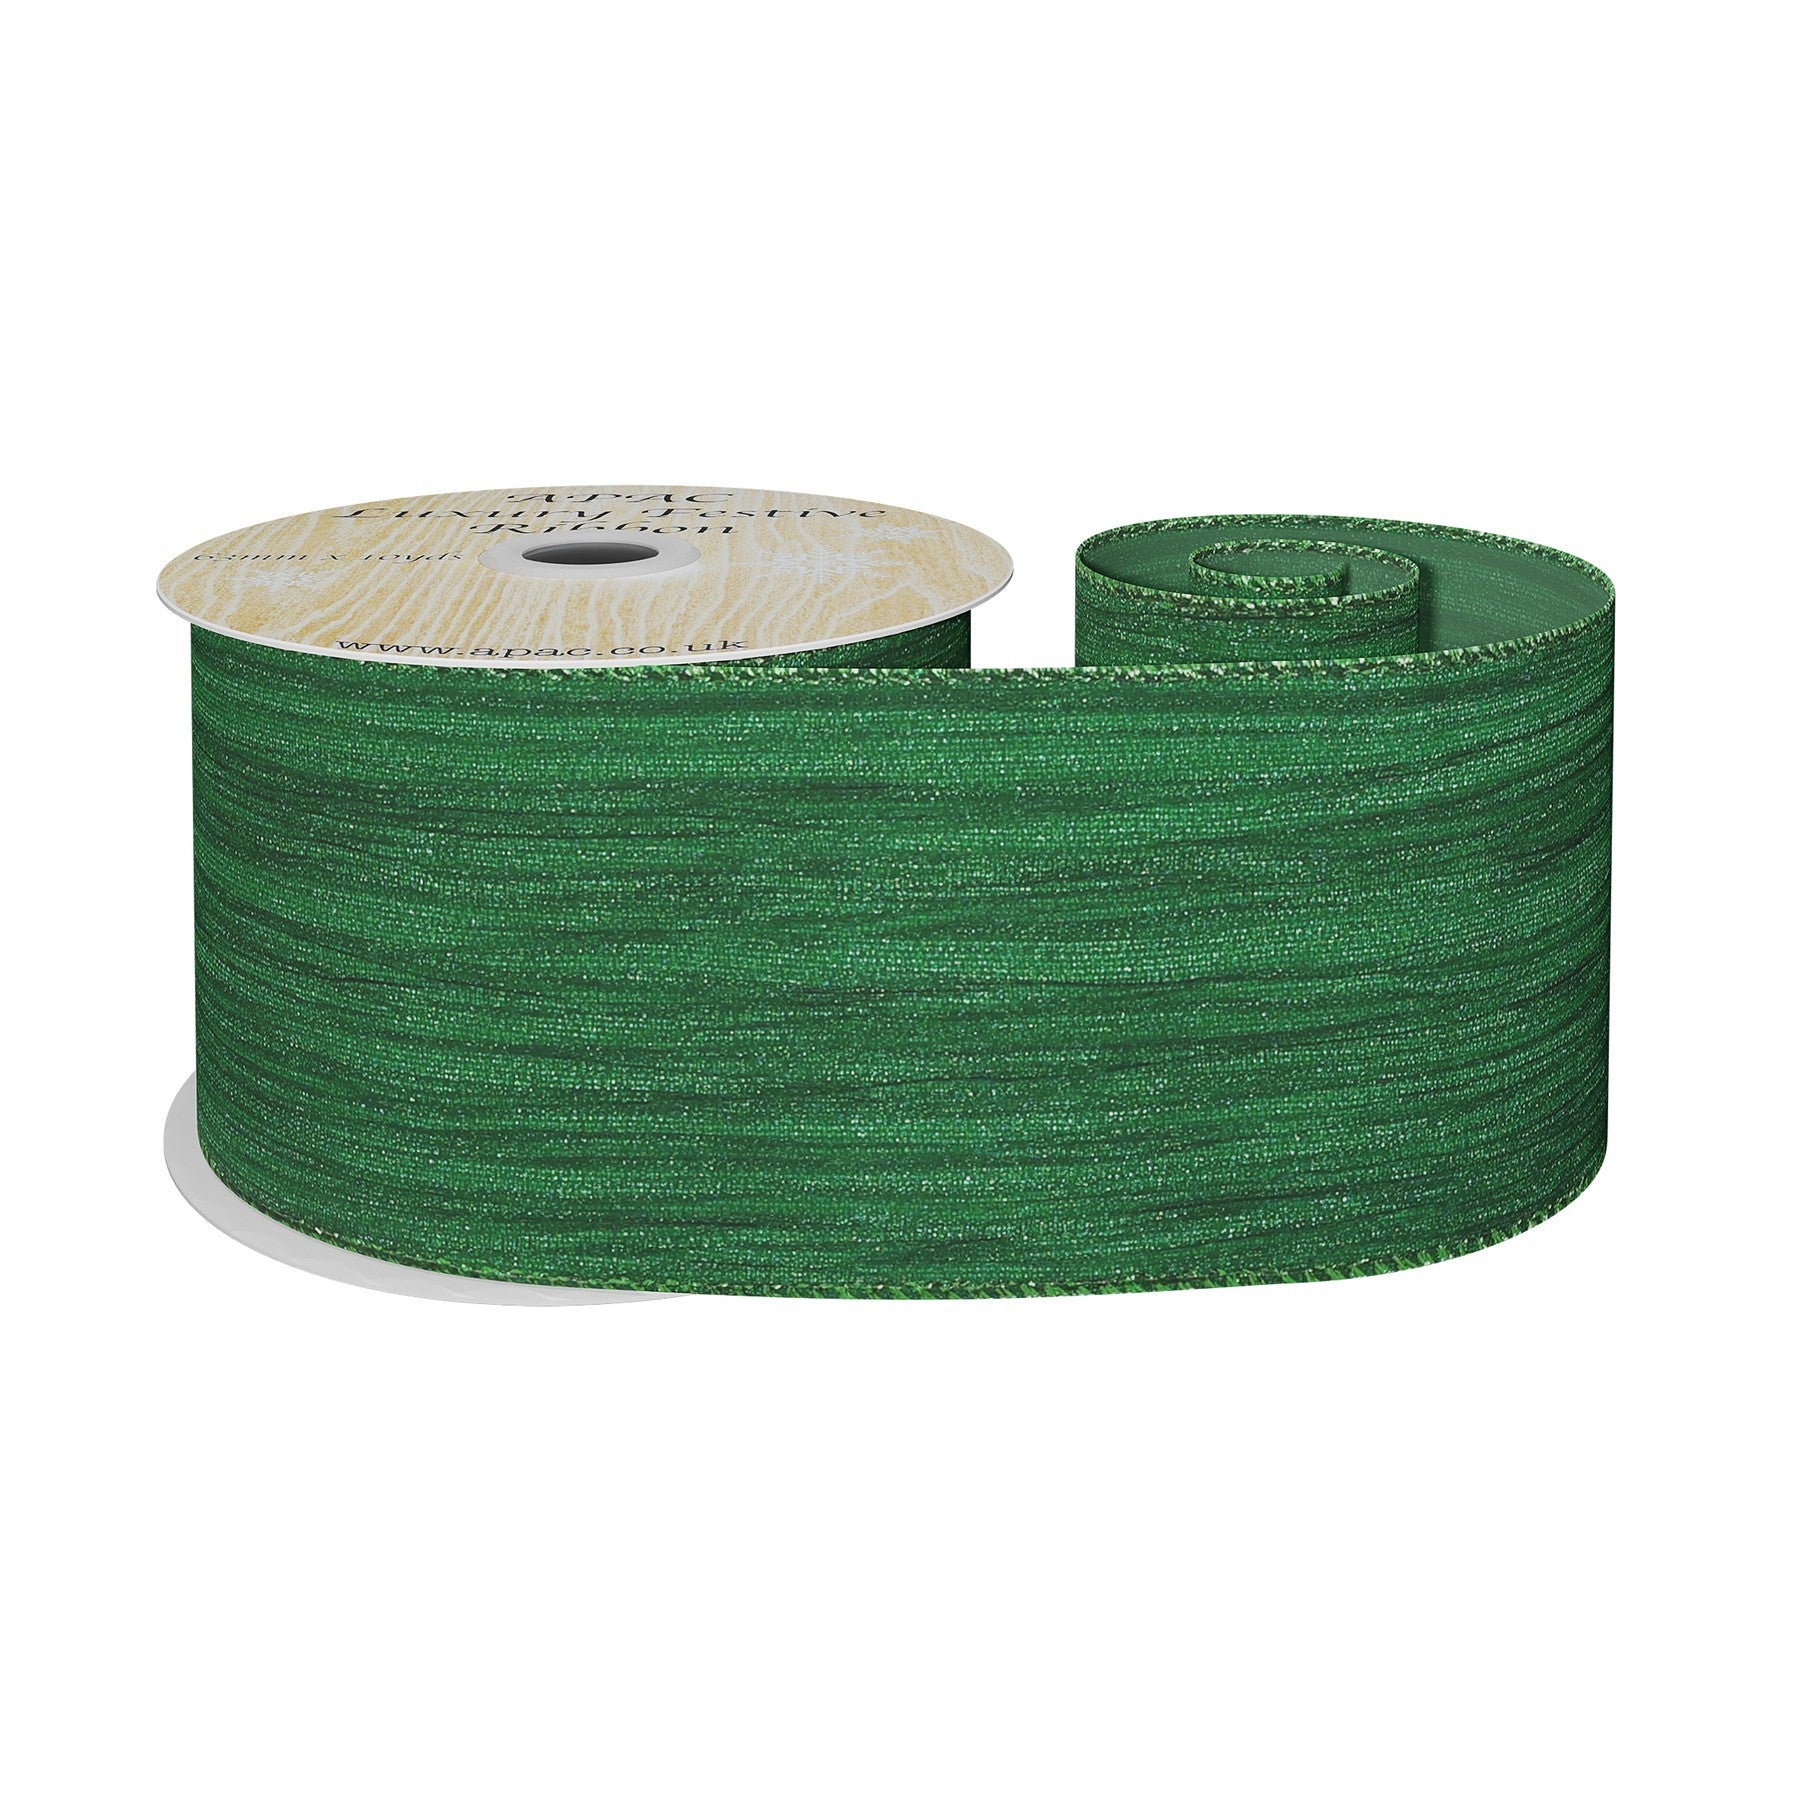 View Green Metallic Crinkle Ribbon 10yd information